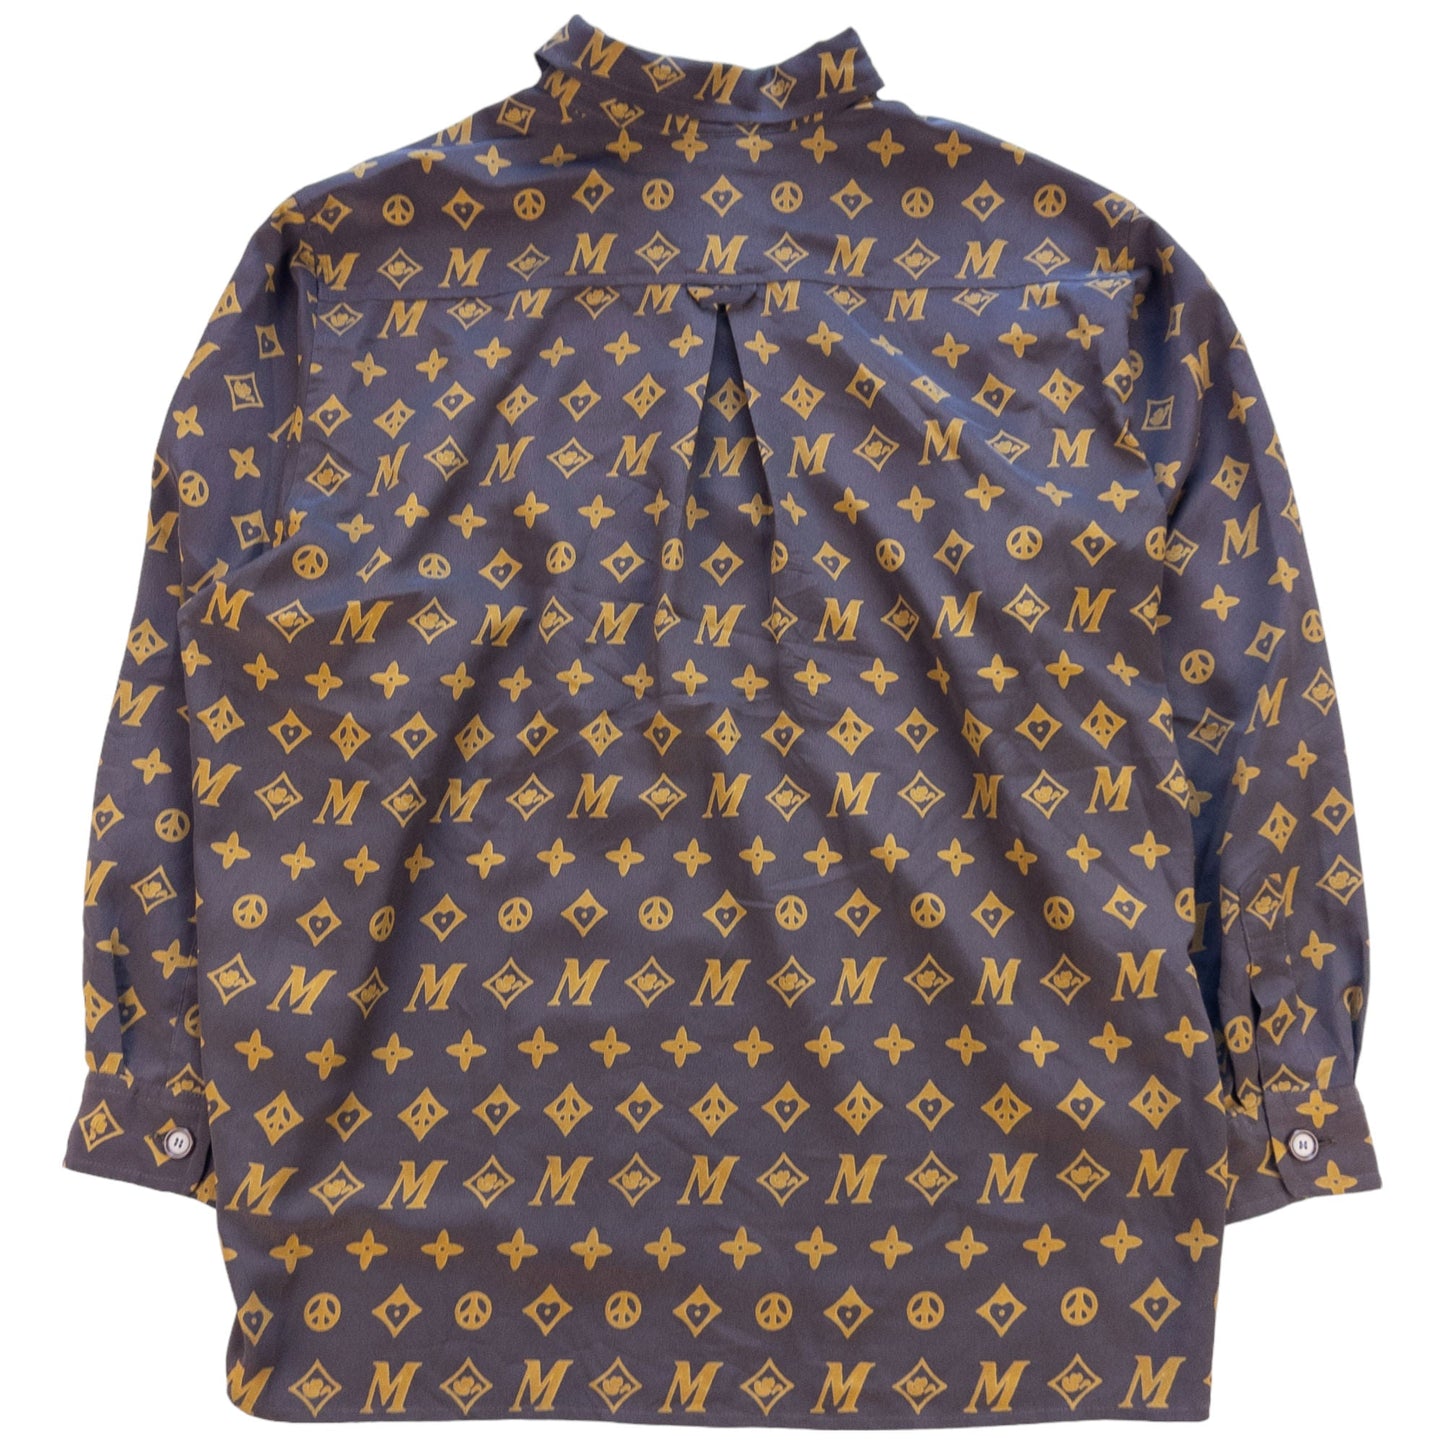 Vintage Moschino Louis Vuitton RIP Button Up Shirt Size M